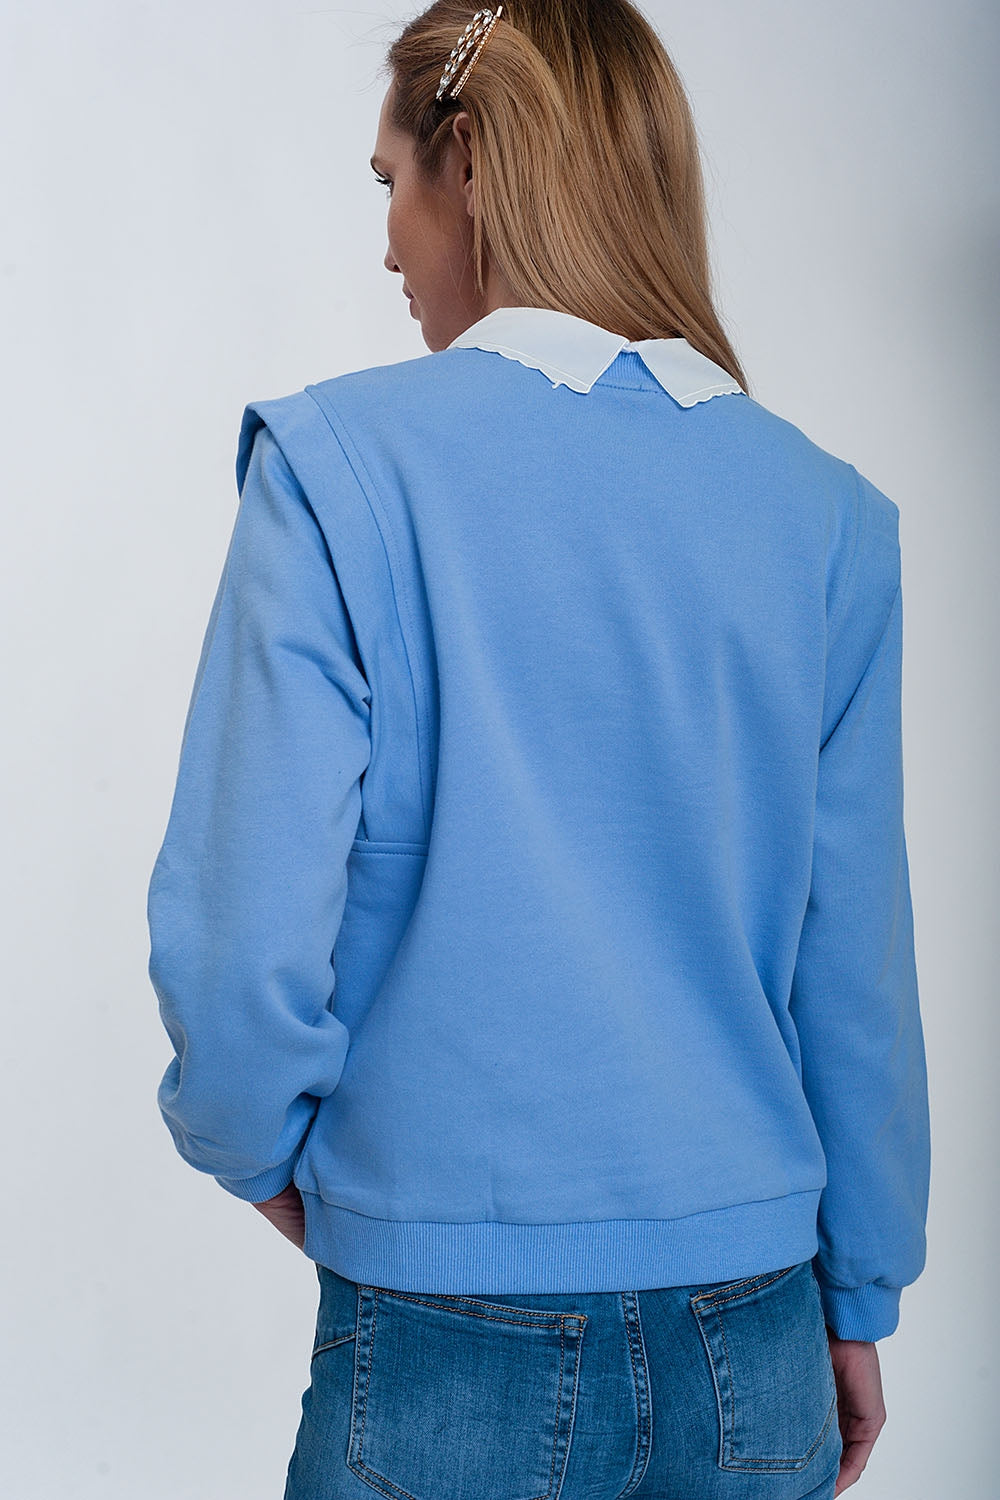 Boyfriend sweatshirt with shoulder details in blue Szua Store